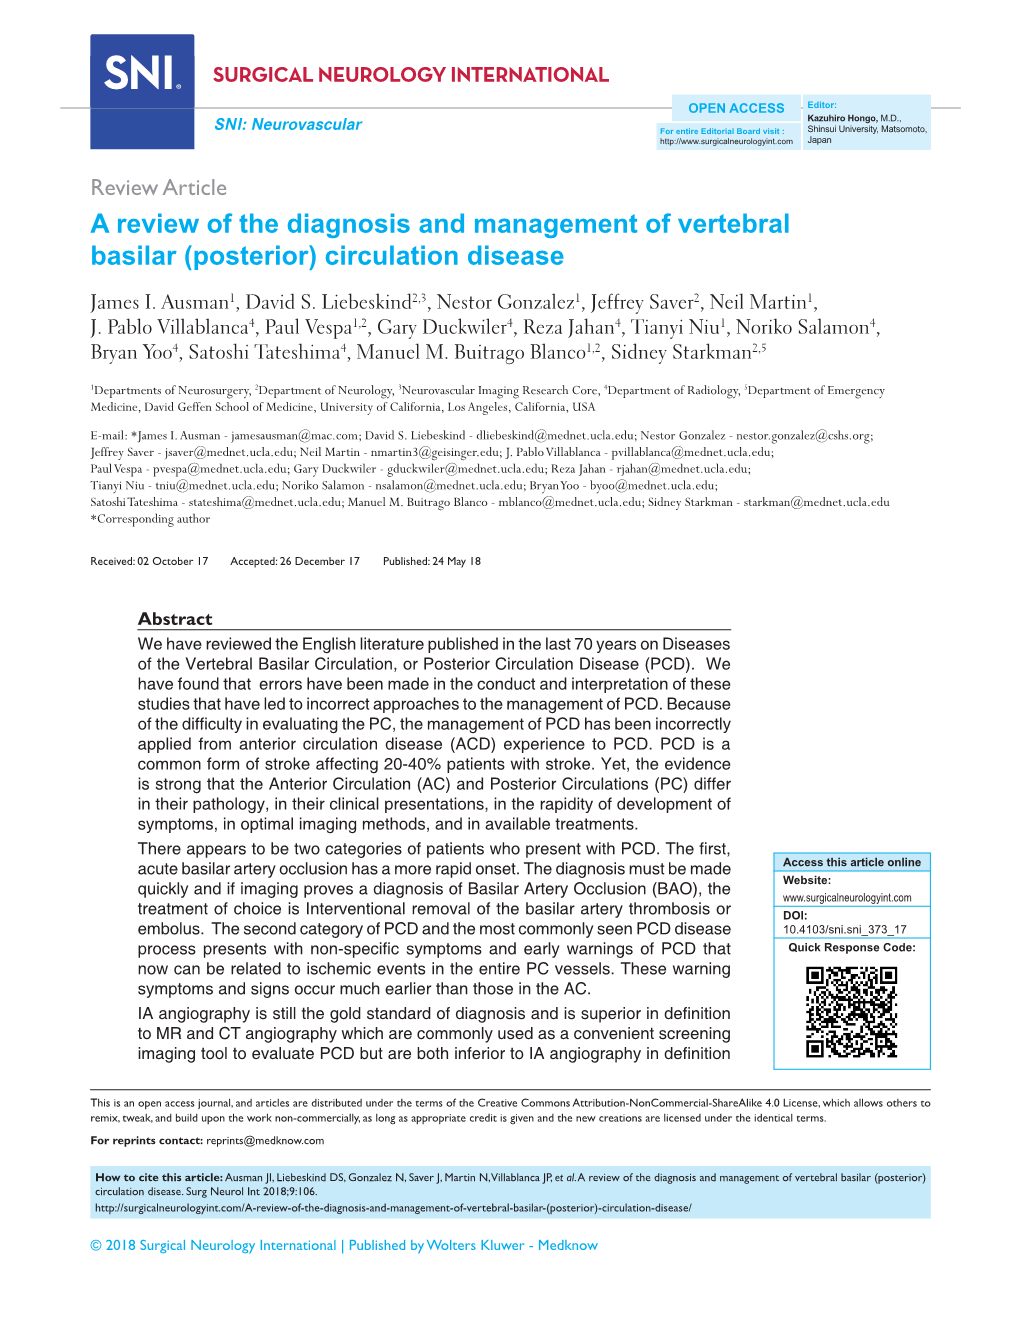 A Review of the Diagnosis and Management of Vertebral Basilar (Posterior) Circulation Disease James I